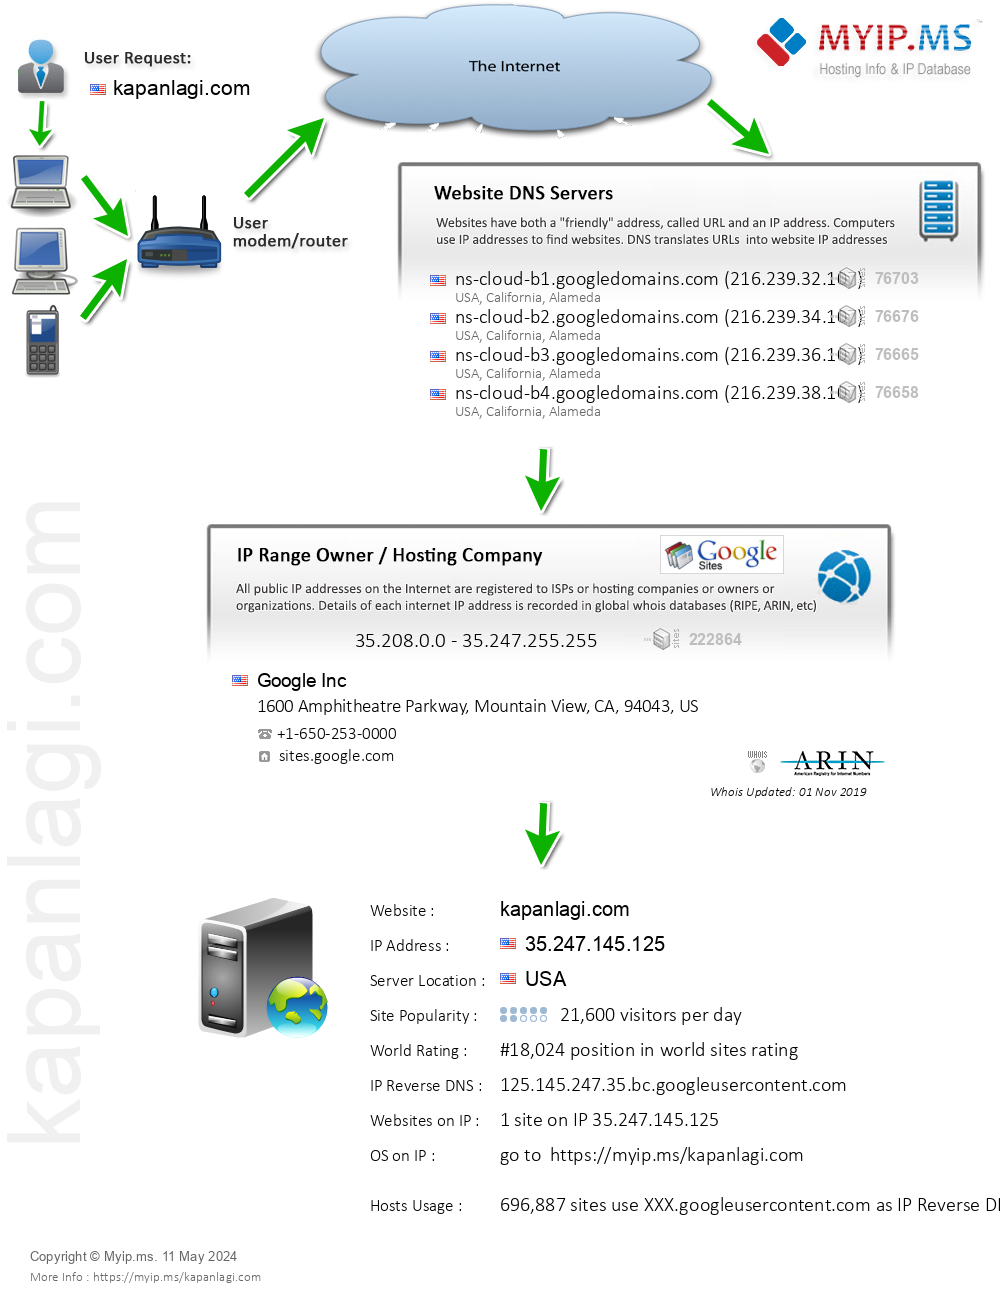 Kapanlagi.com - Website Hosting Visual IP Diagram